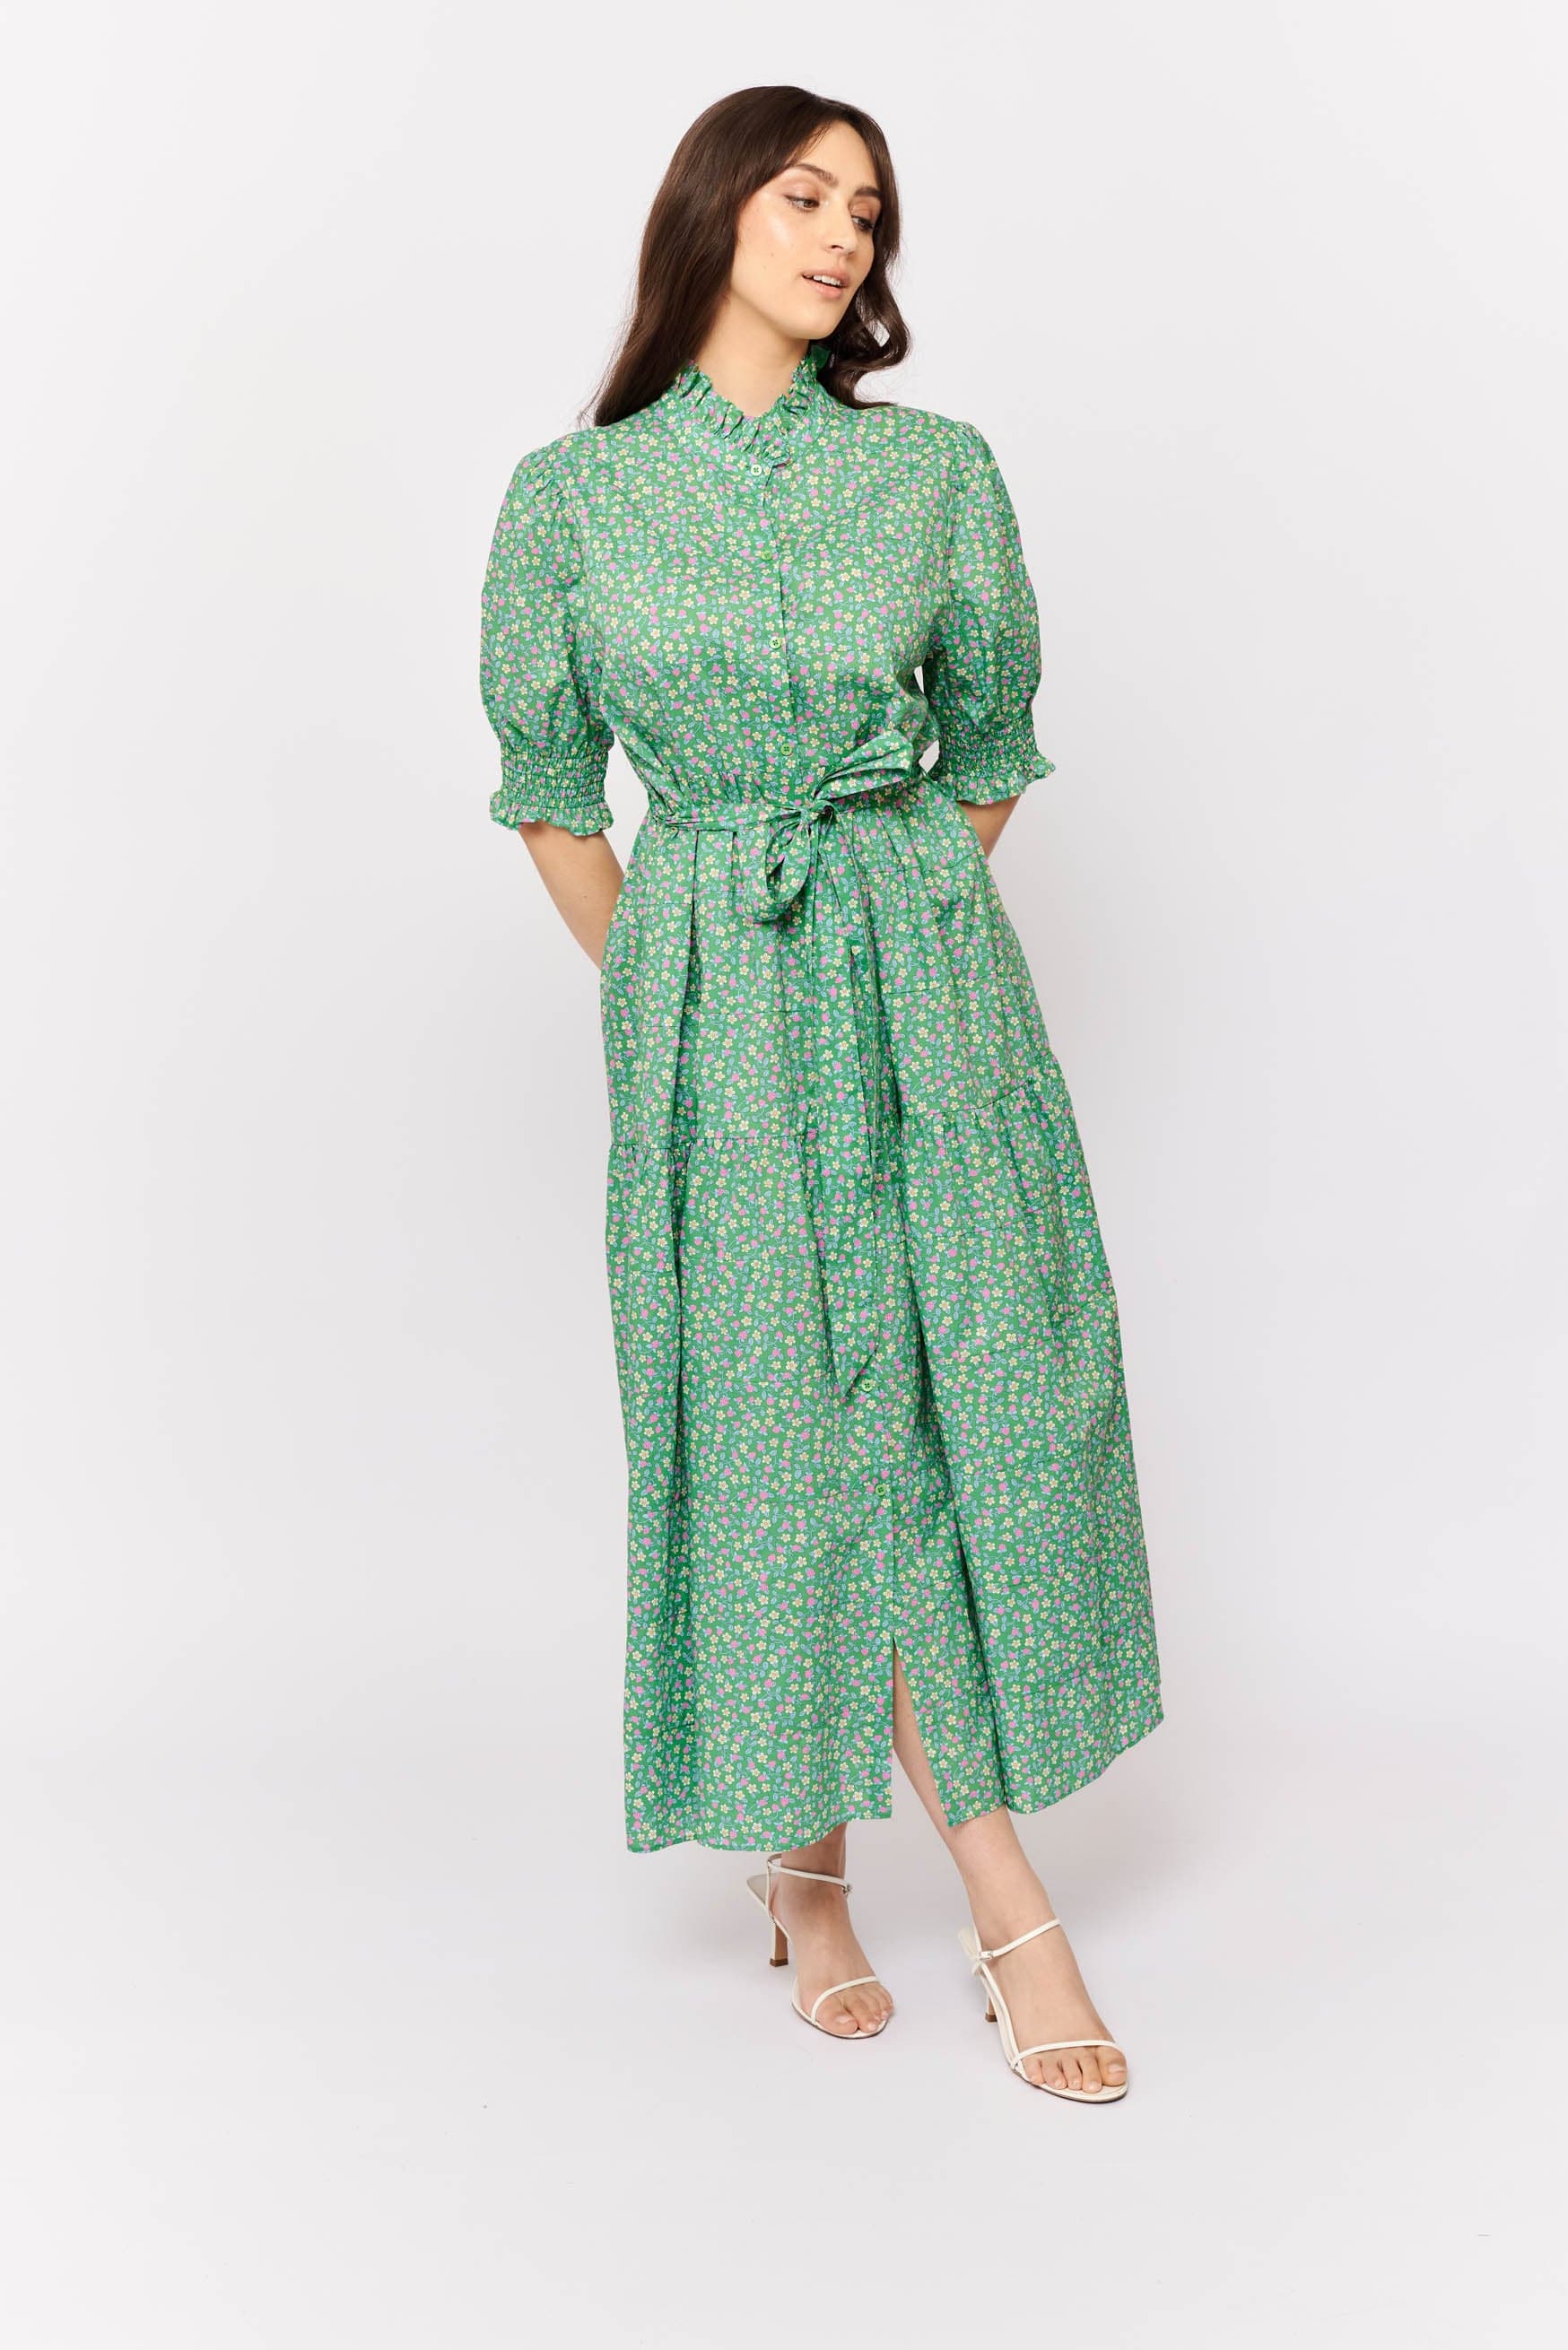 Elio Green Dress